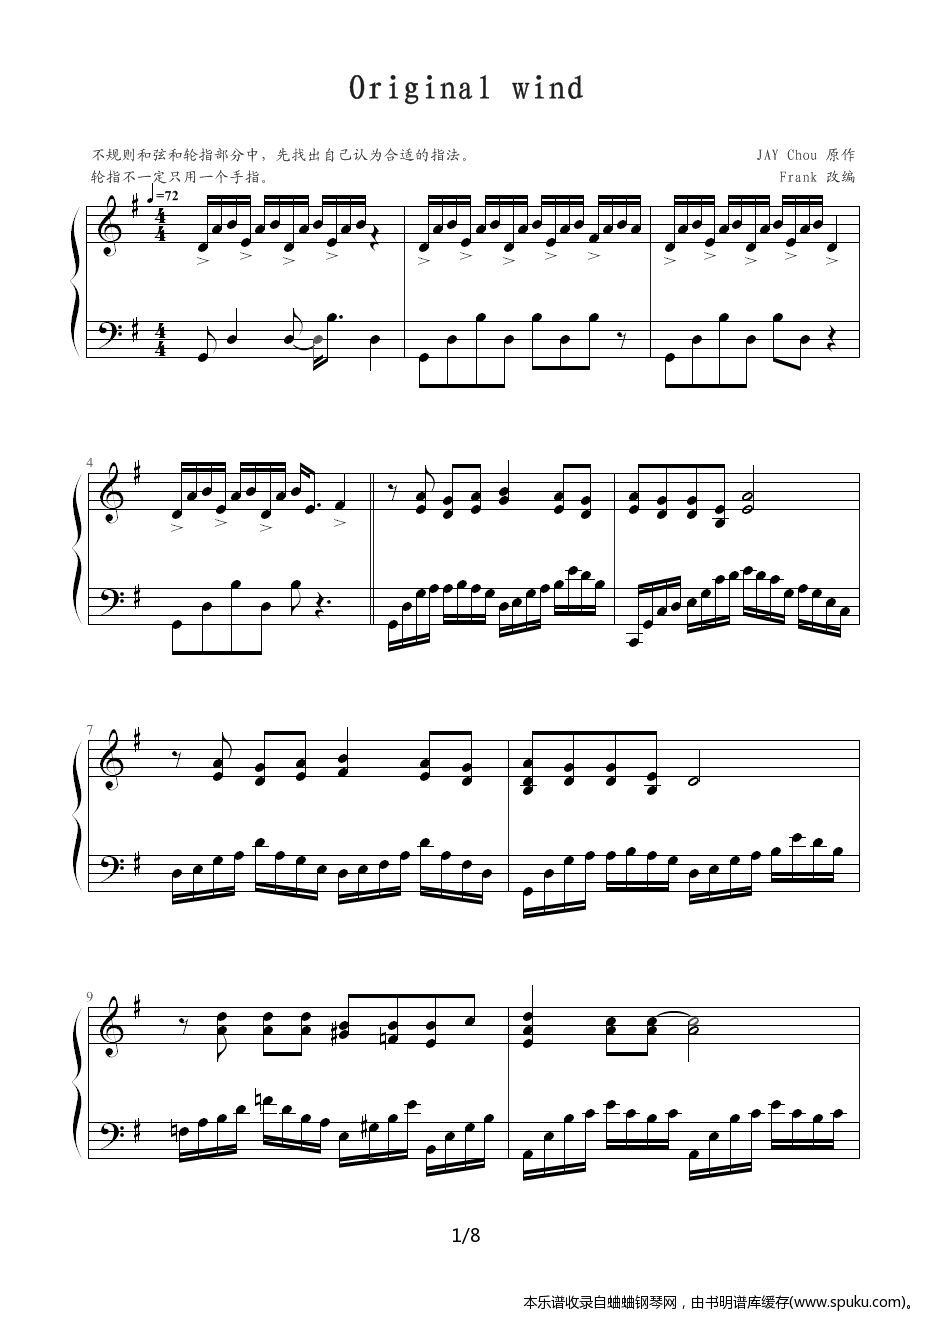 OriginalWind1-钢琴谱-曲谱